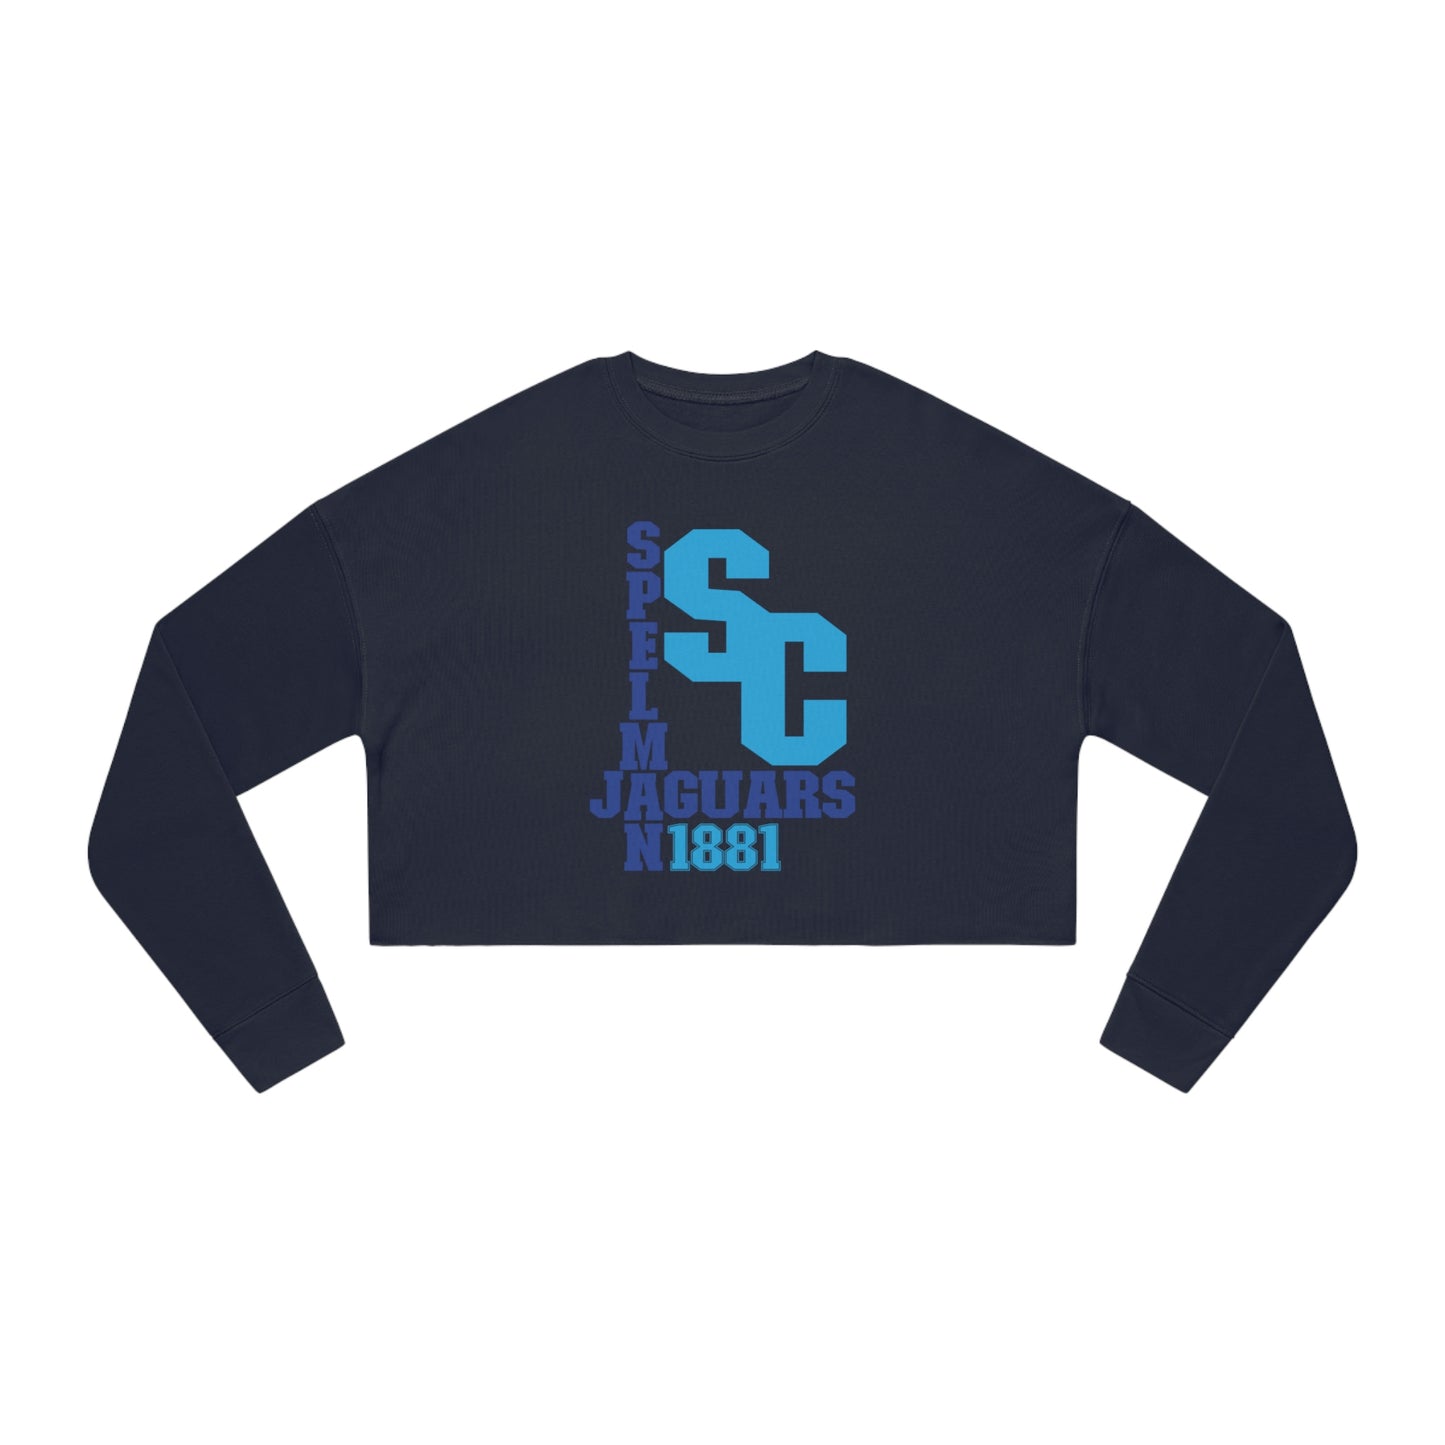 HBCU Love (Spelman College/ Women's Cropped Sweatshirt)